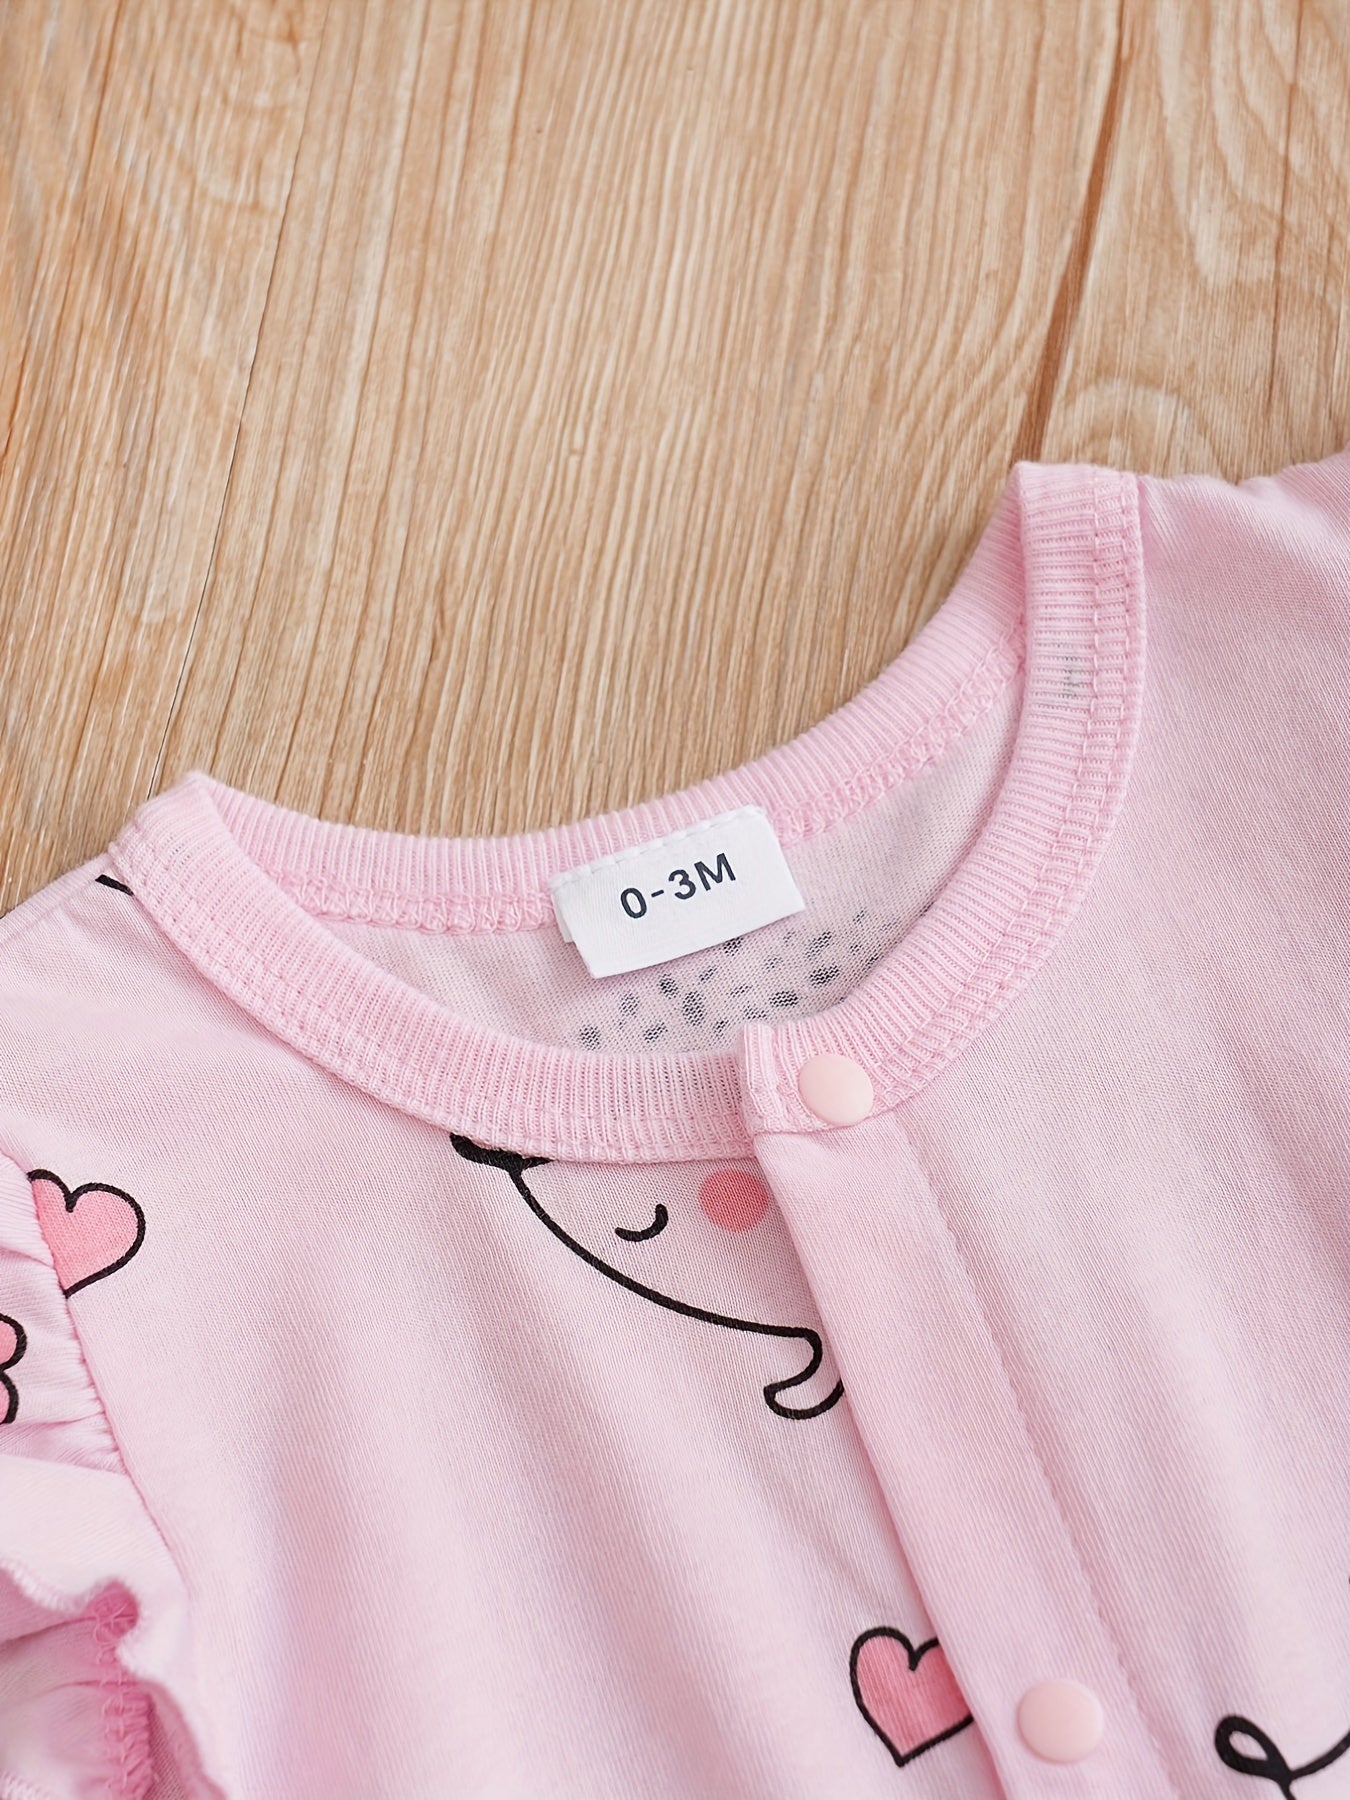 Comfy & Cute: Hedgehog Print Flutter Sleeve Baby Girls Jumpsuit